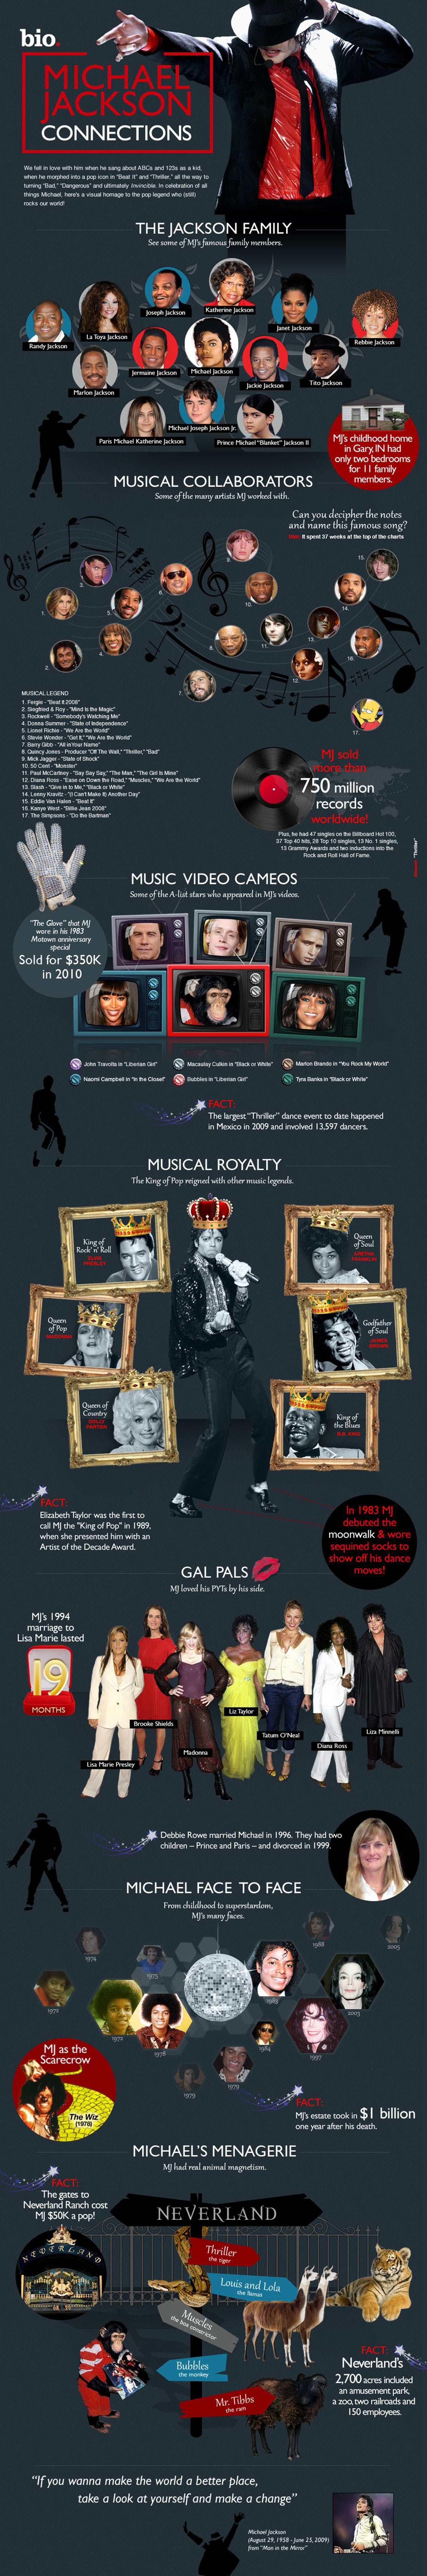 Michael Jackson Life and Work - Music Infographic